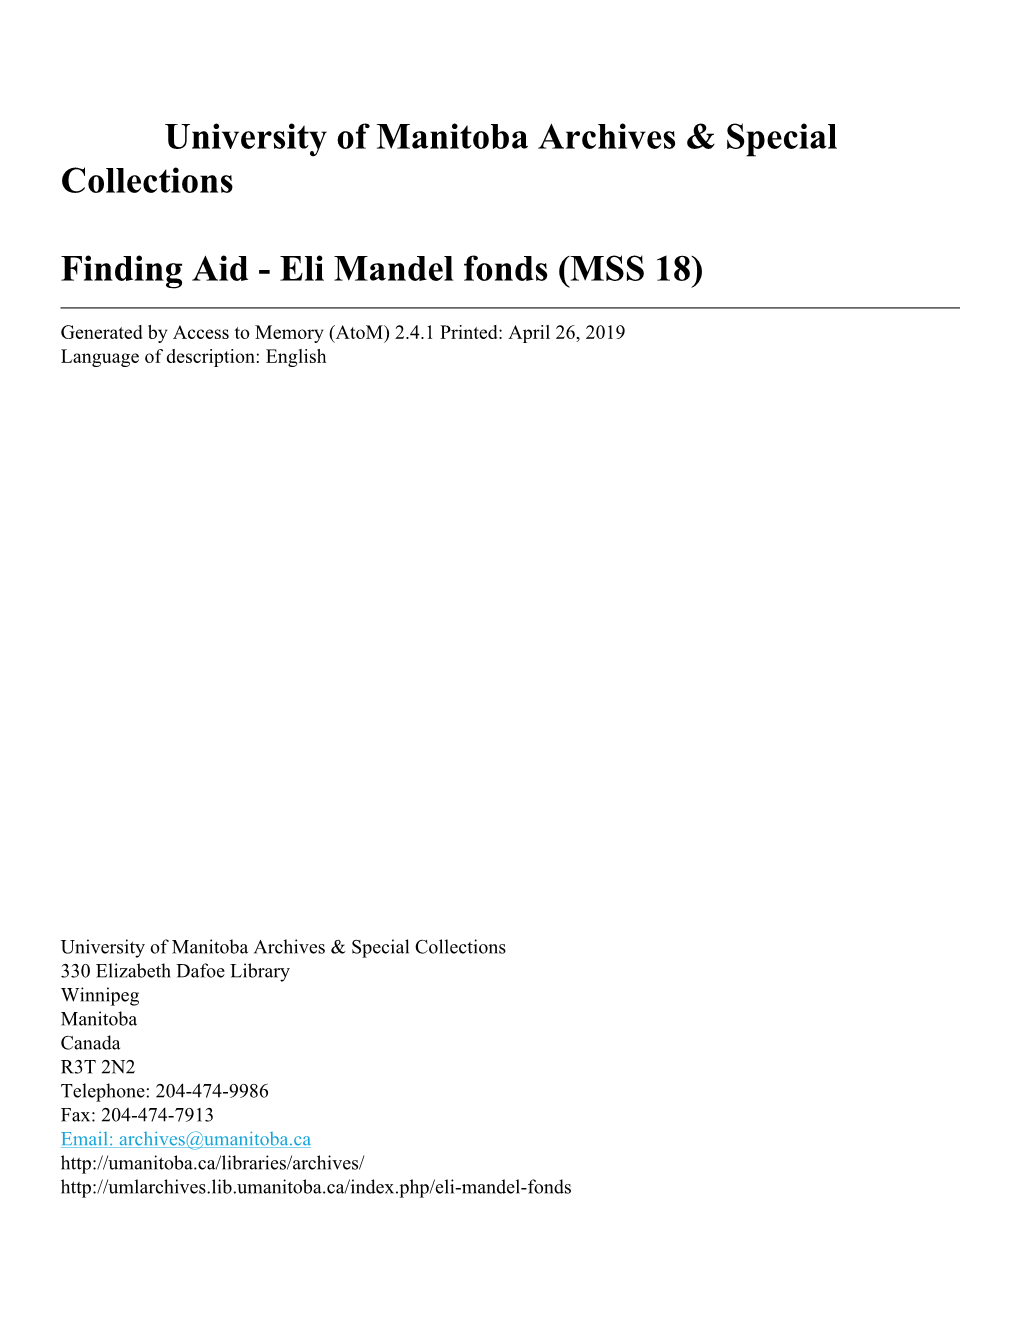 Eli Mandel Fonds (MSS 18)